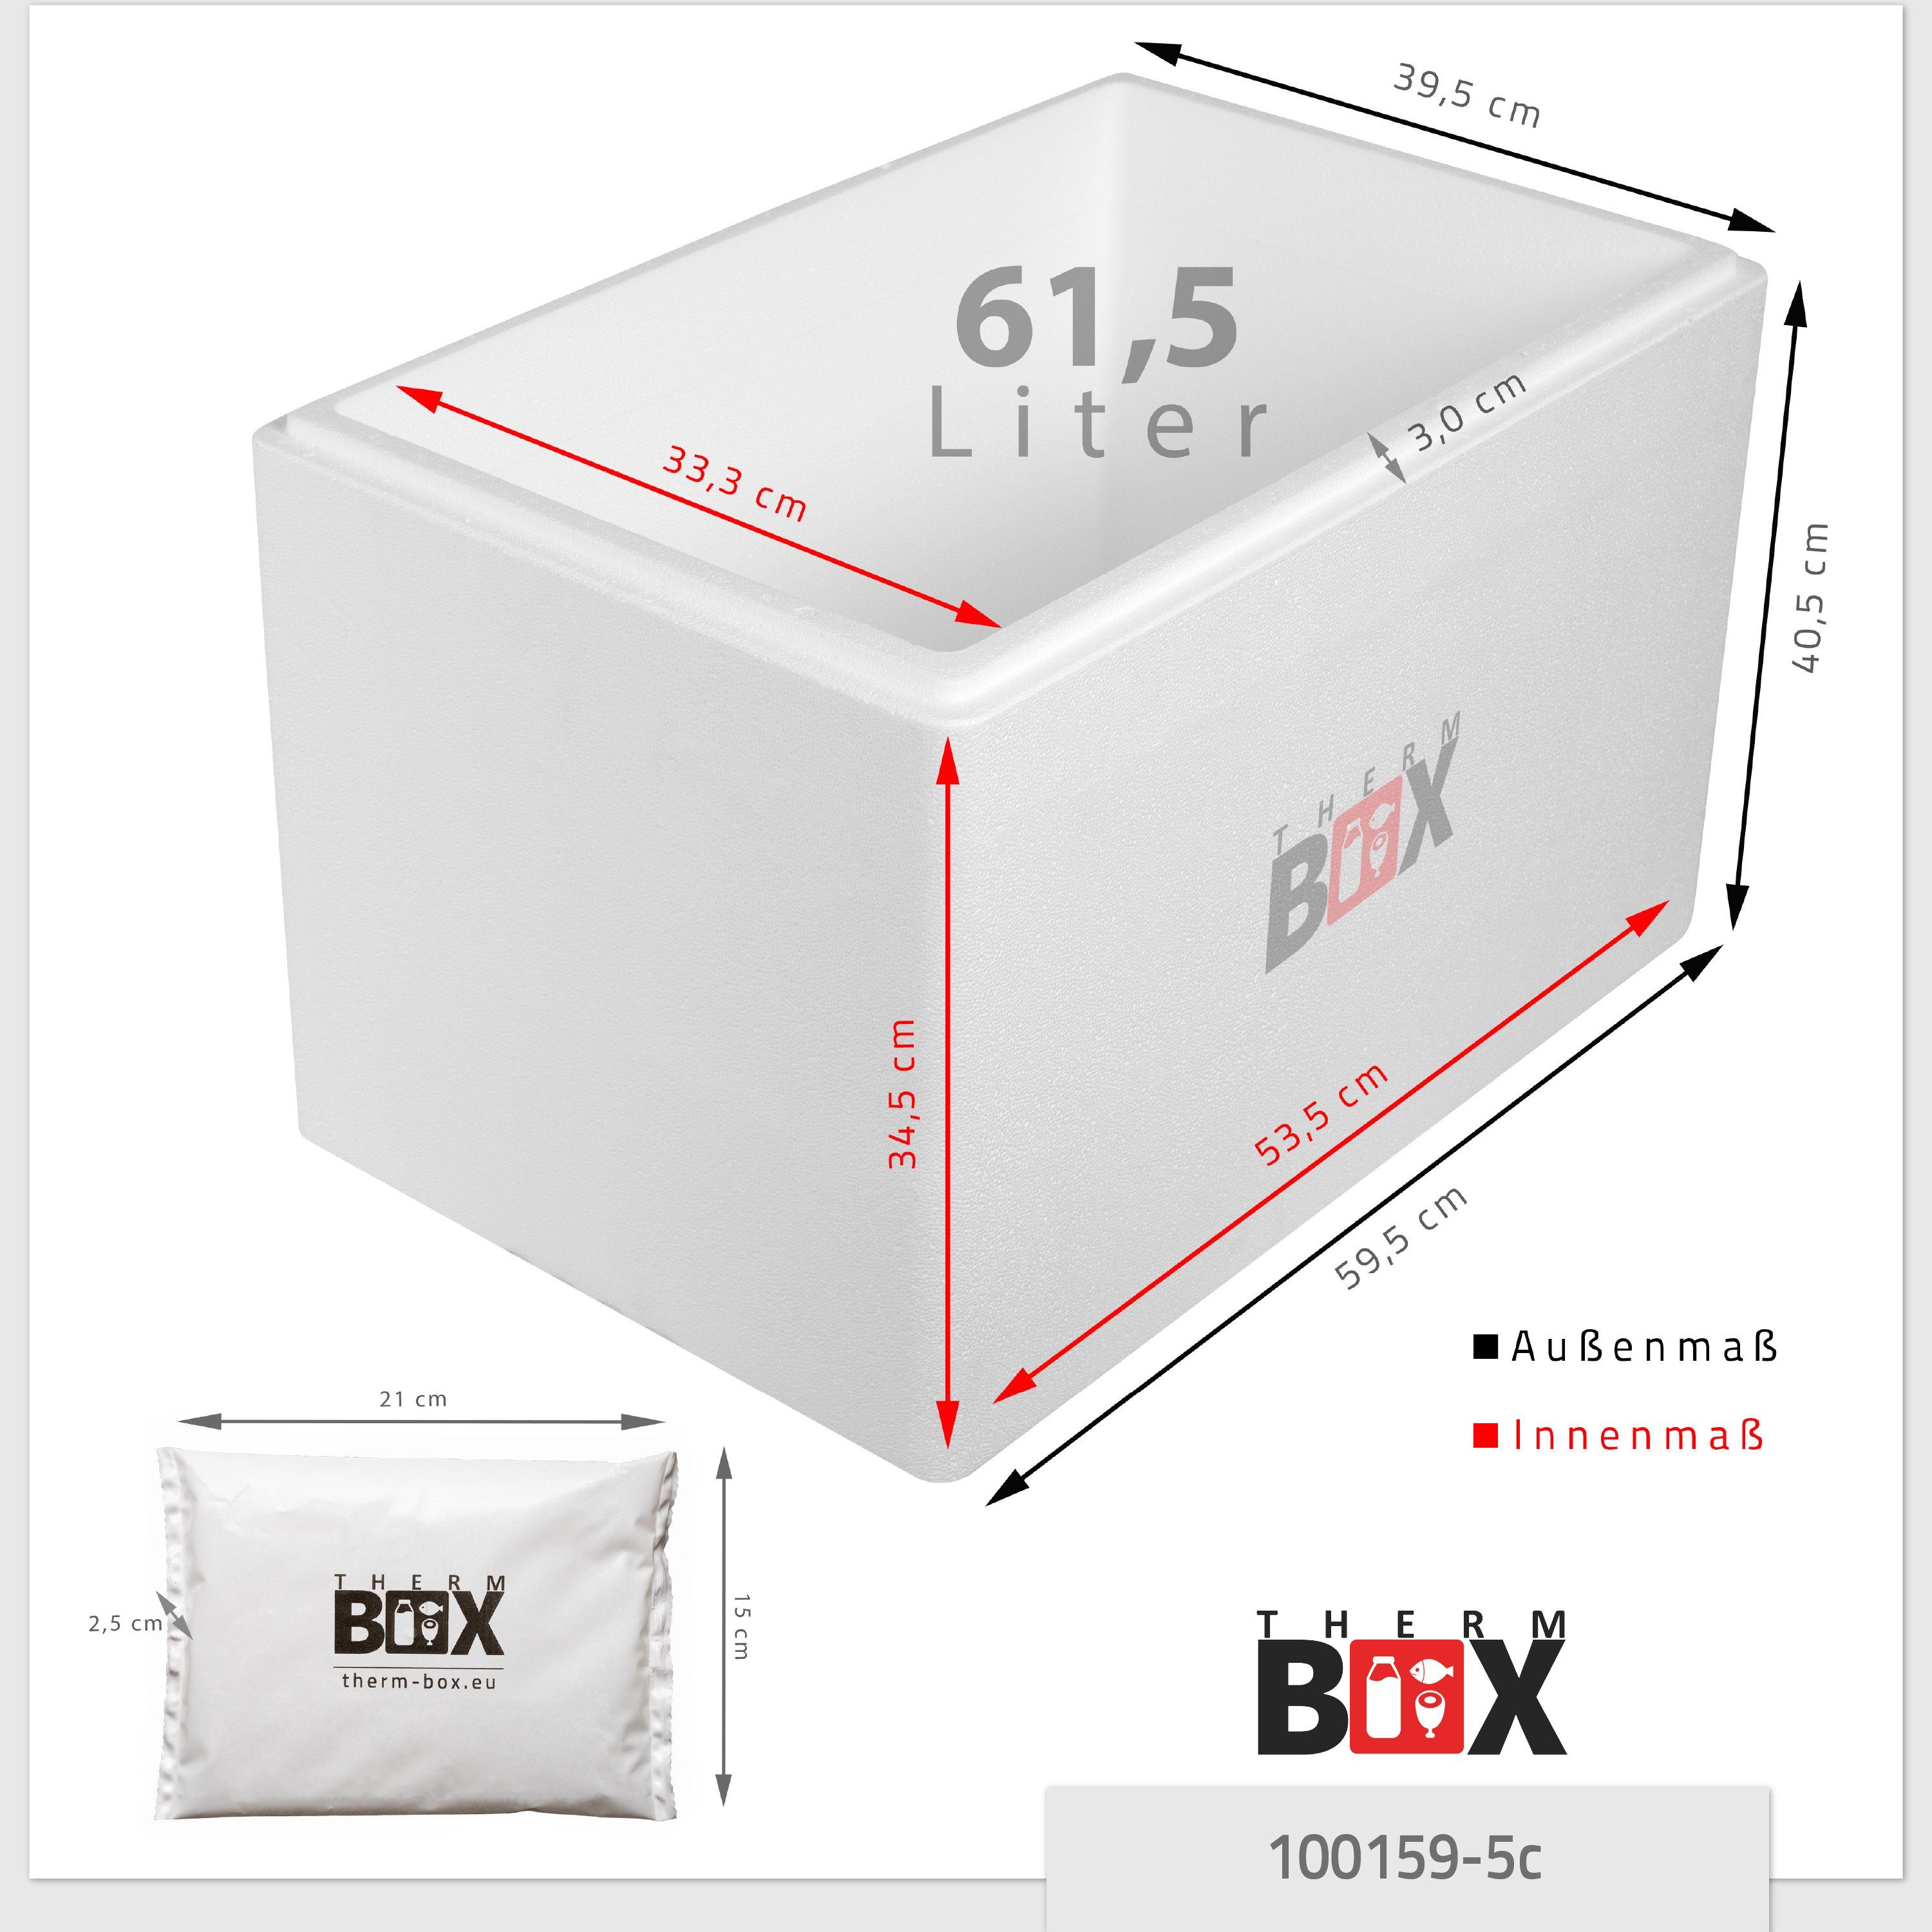 5 Kühlbox 61W Kühlkissen), Kühlakku Styropor-Verdichtet, Transportbox mit Thermobehälter 53x33x34cm (0-tlg., Kühlkissen, Styroporbox THERM-BOX Innen: Thermbox mit Thermbehälter 61,5L